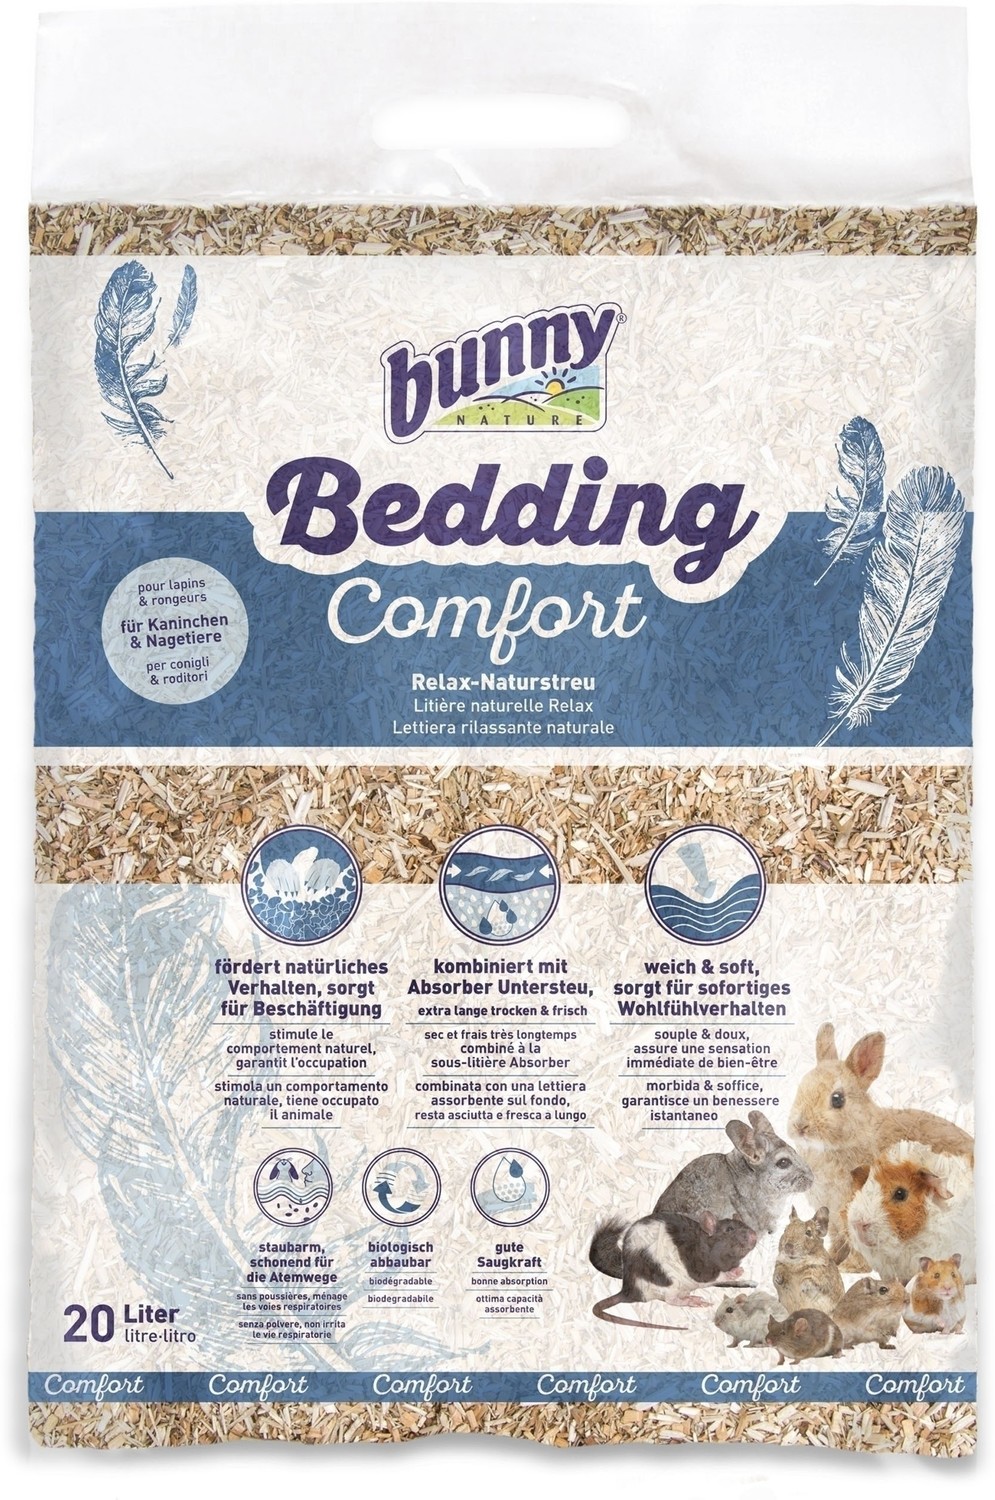 bunnyNature Bedding Comfort